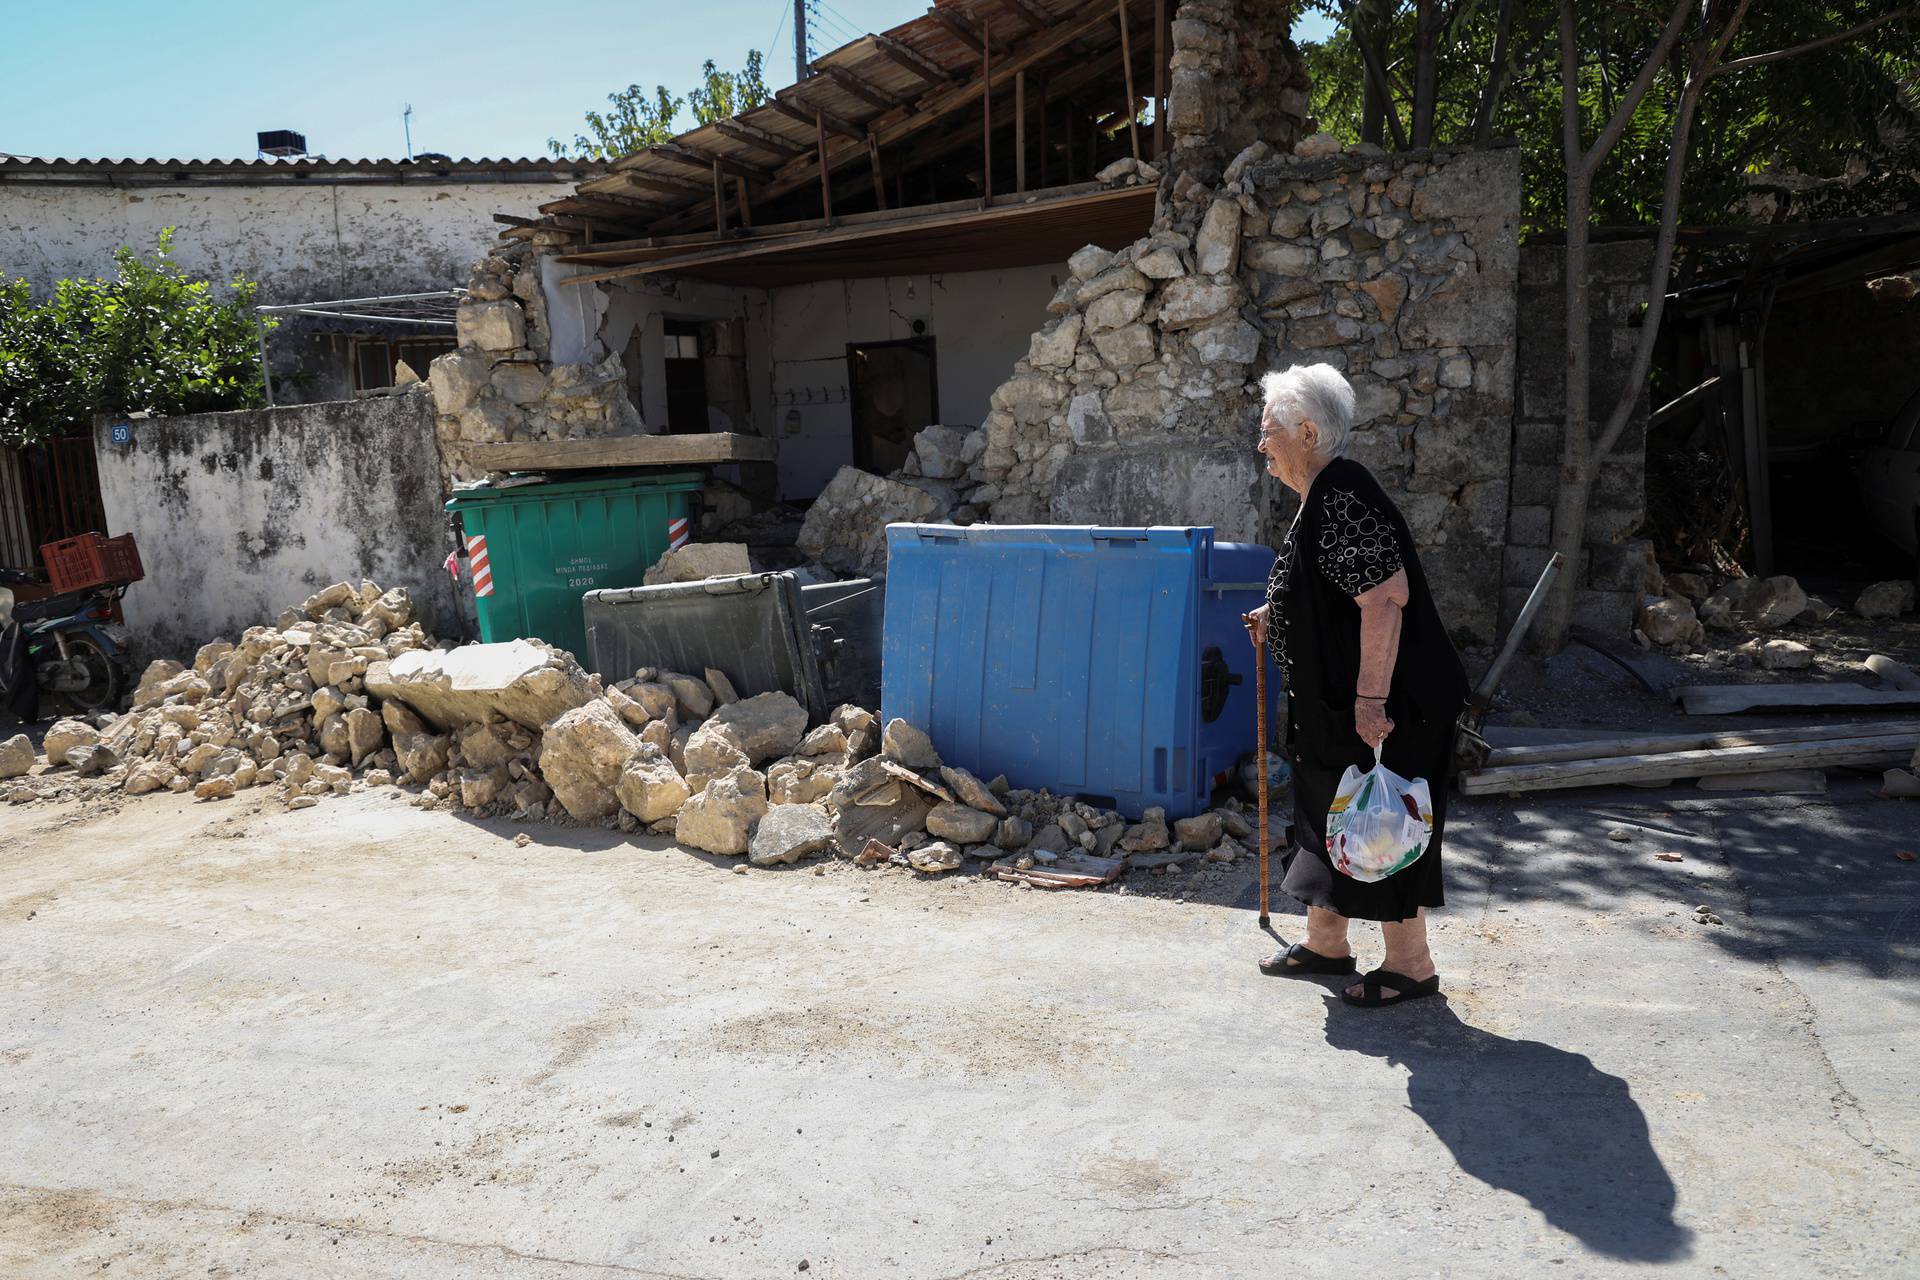 Earthquake on the island of Crete